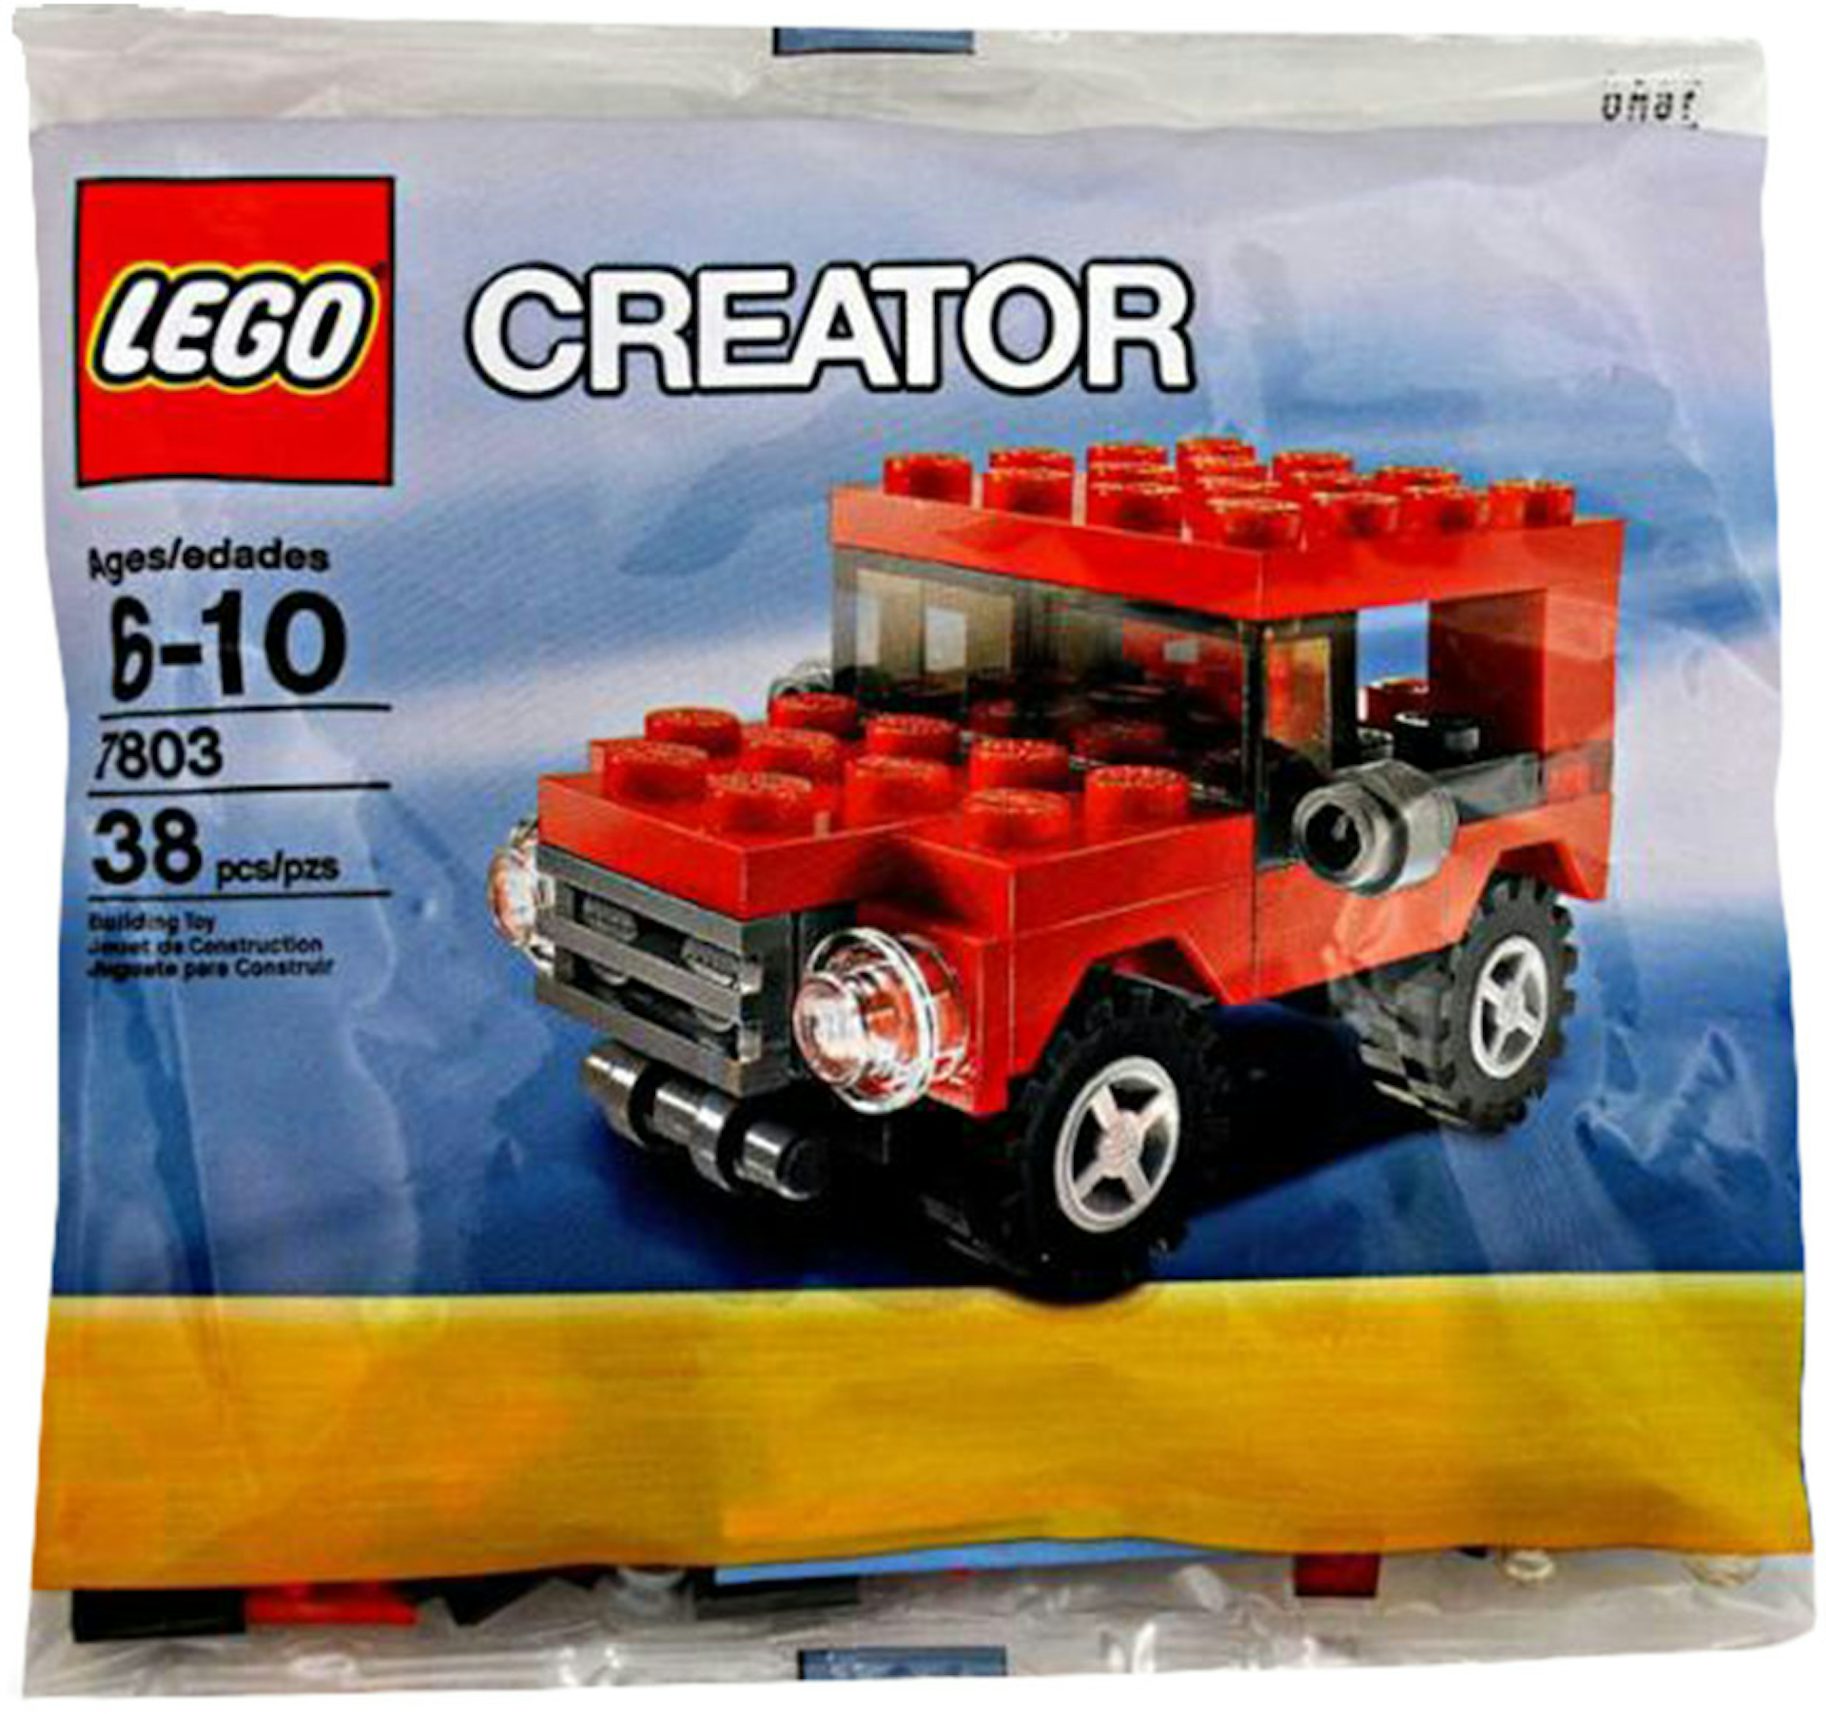 https://images.stockx.com/images/LEGO-Creator-Red-Jeep-Set-7803.jpg?fit=fill&bg=FFFFFF&w=1200&h=857&fm=jpg&auto=compress&dpr=2&trim=color&updated_at=1647883709&q=60